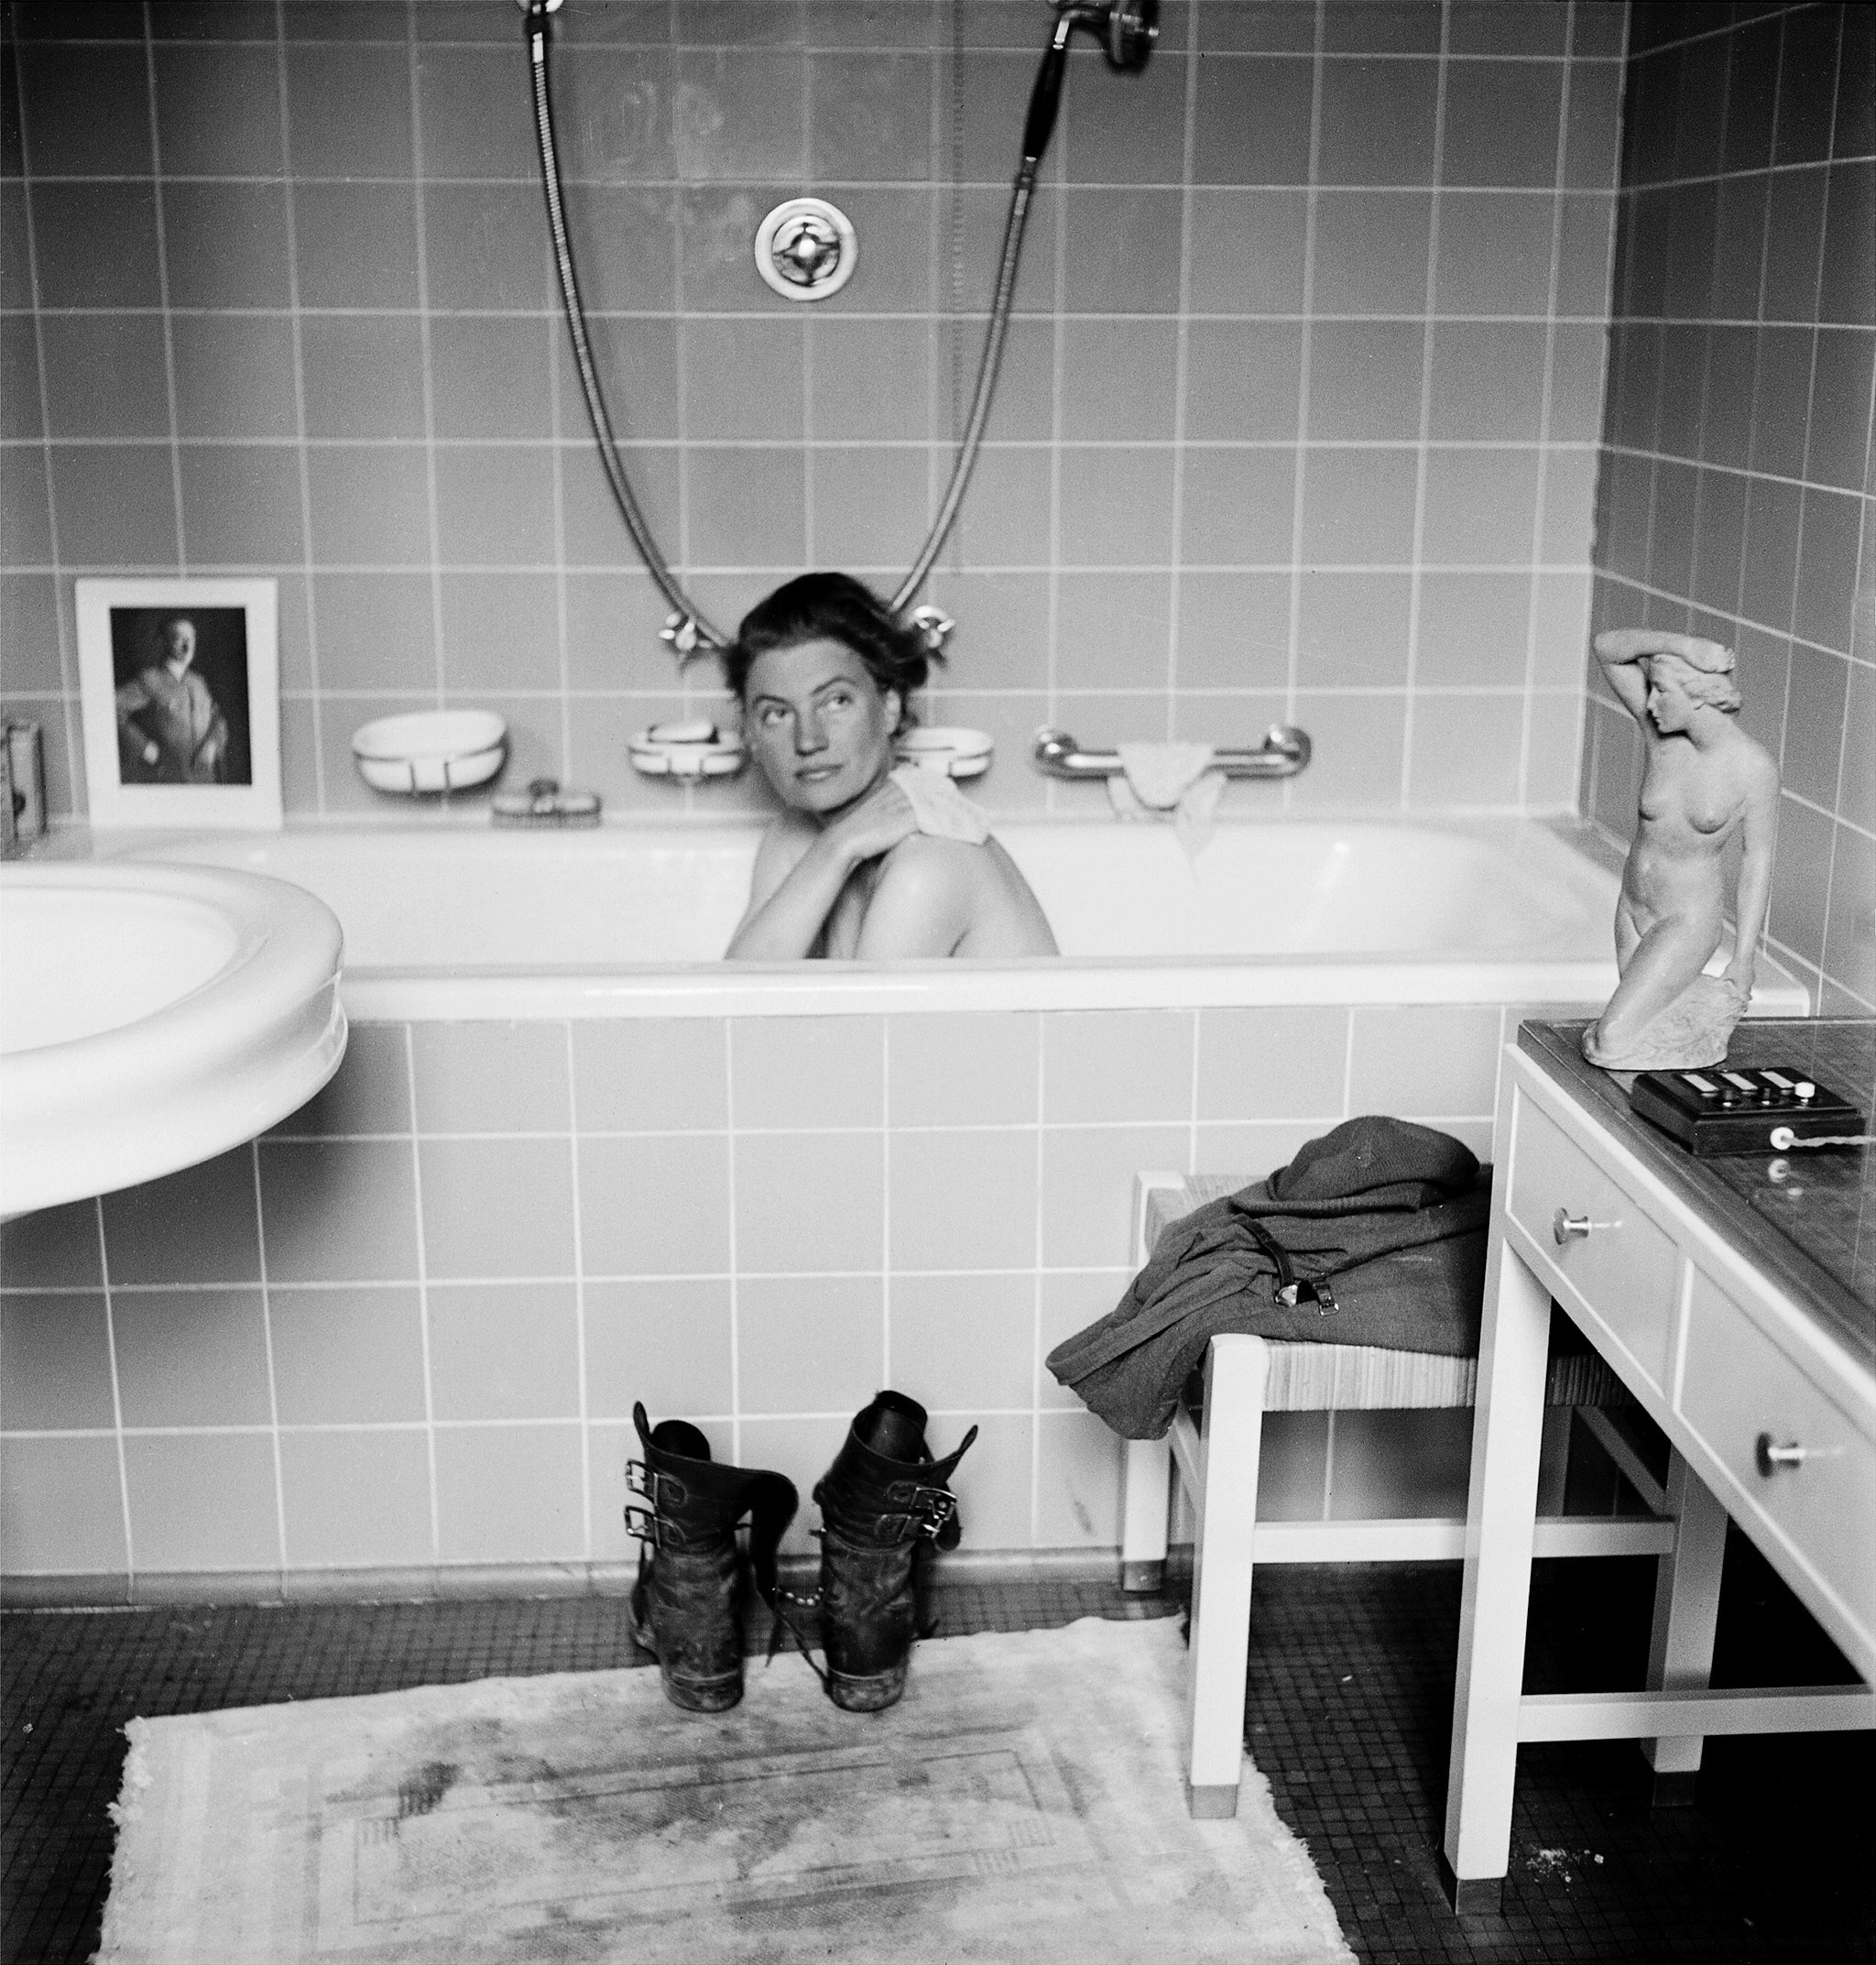 Lee Miller in Hitler's bathtub, Hitler's apartment, Munich, Germany 1945